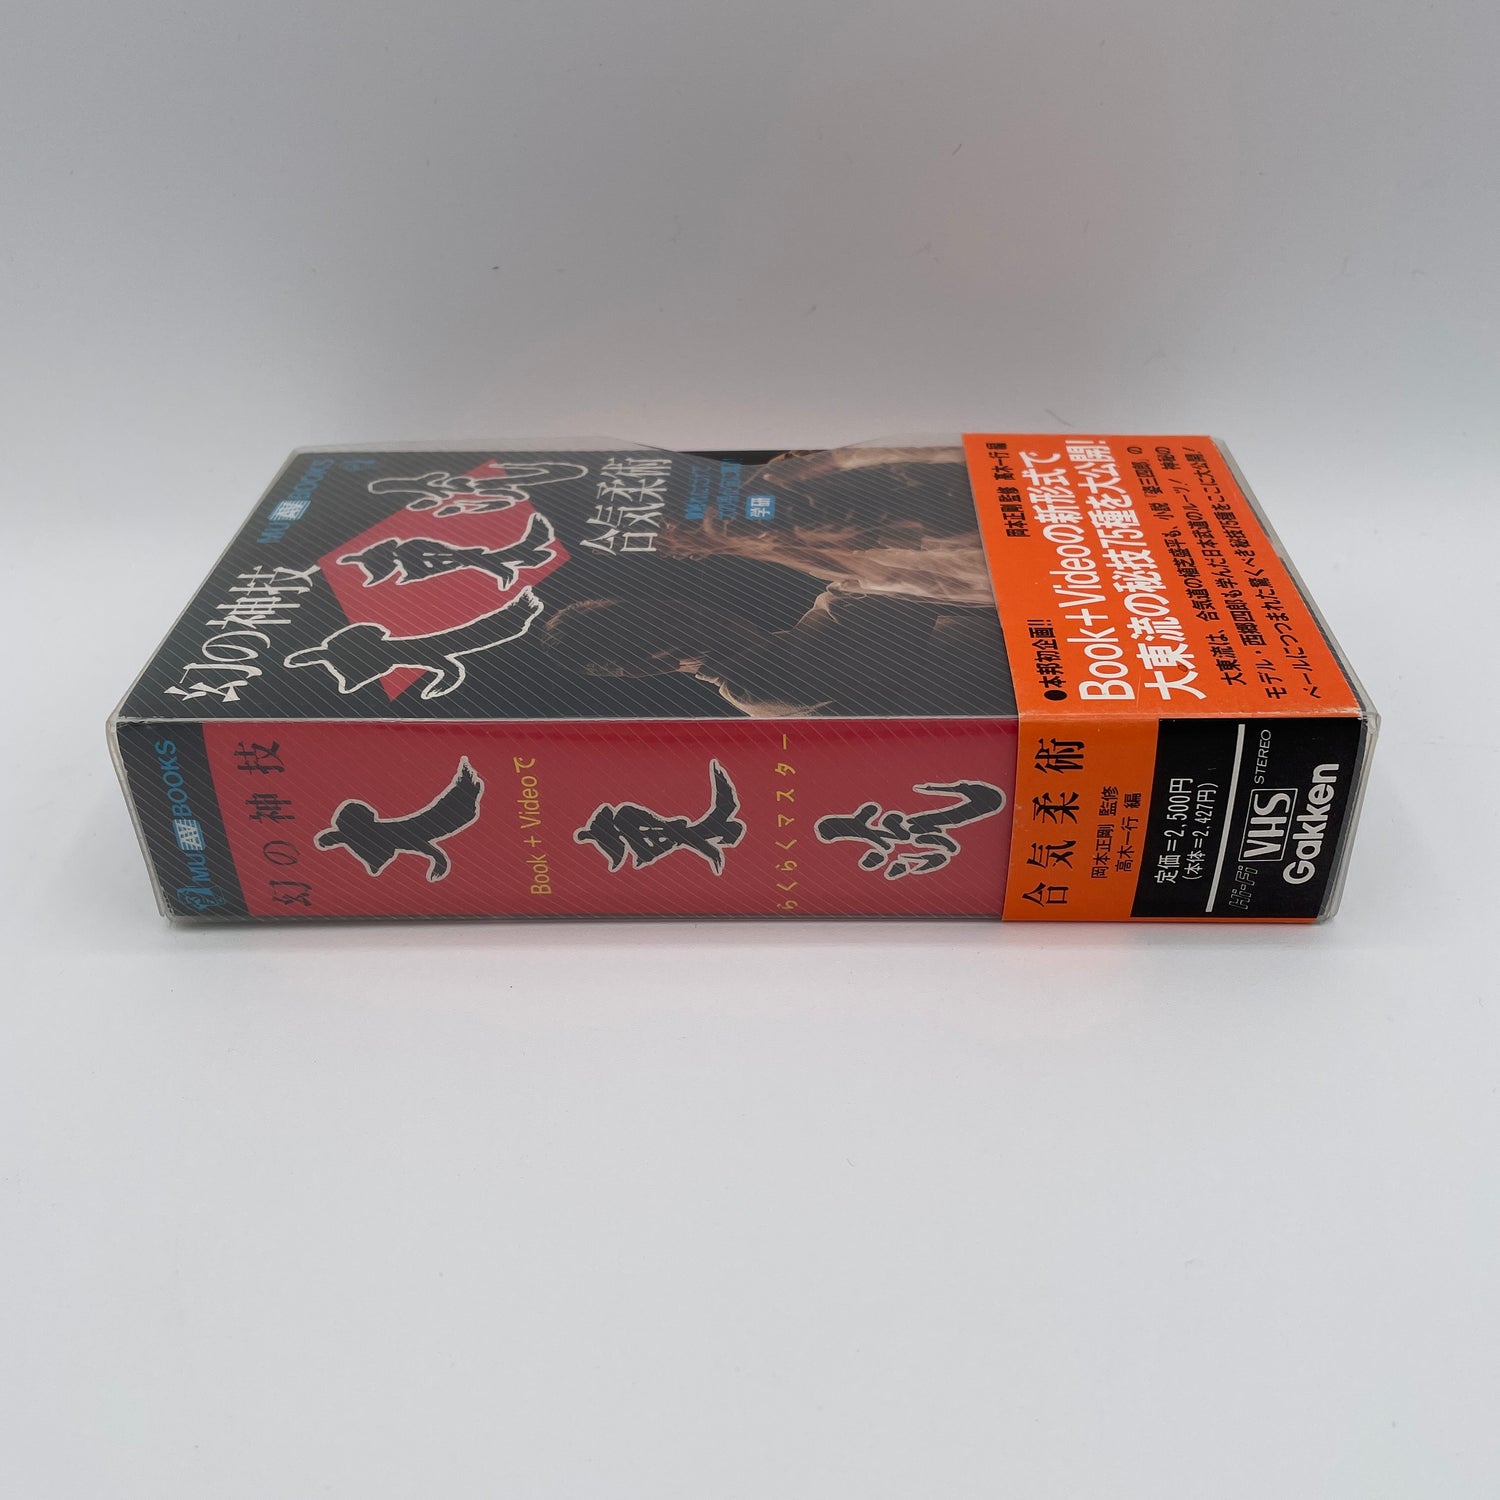 Daito Ryu Aikijujutsu Secrets Book & VHS Set by Seigo Okamoto (Preowned)